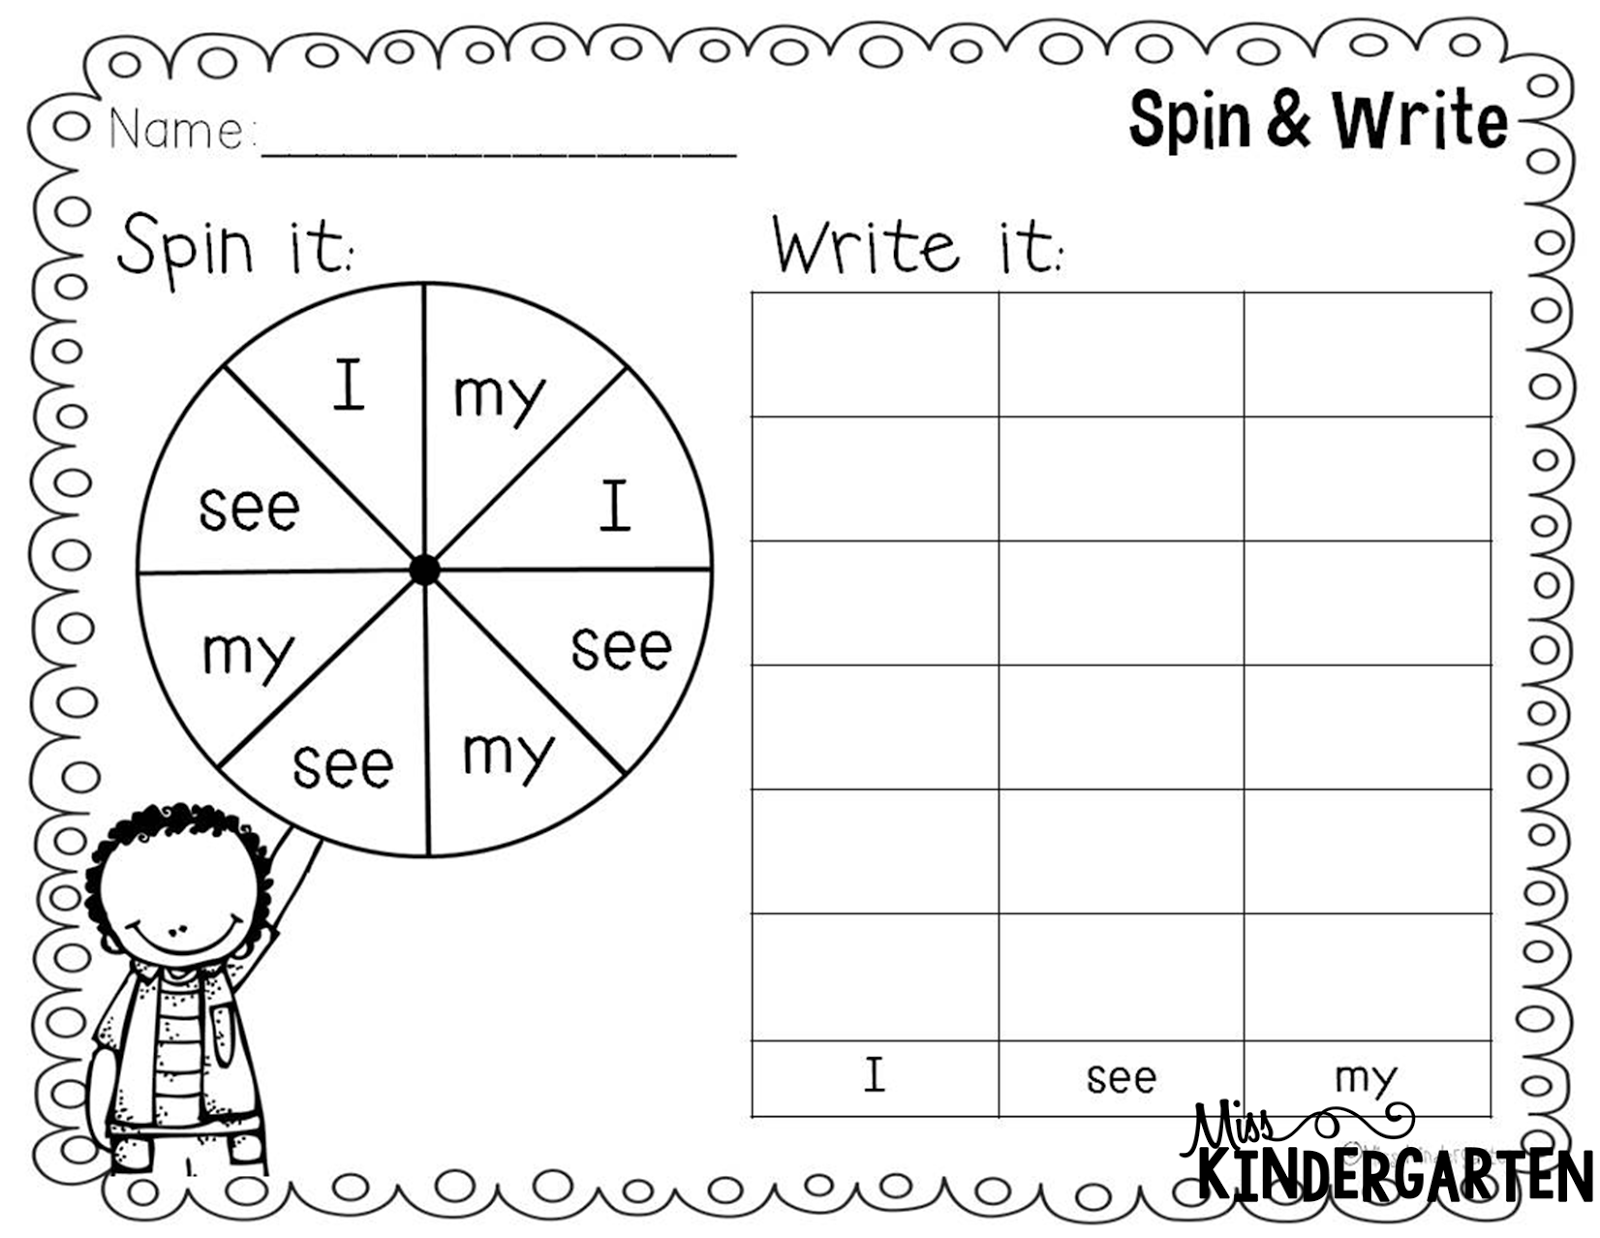 https://misskindergarten.com/downloads/cvc-words-worksheets/